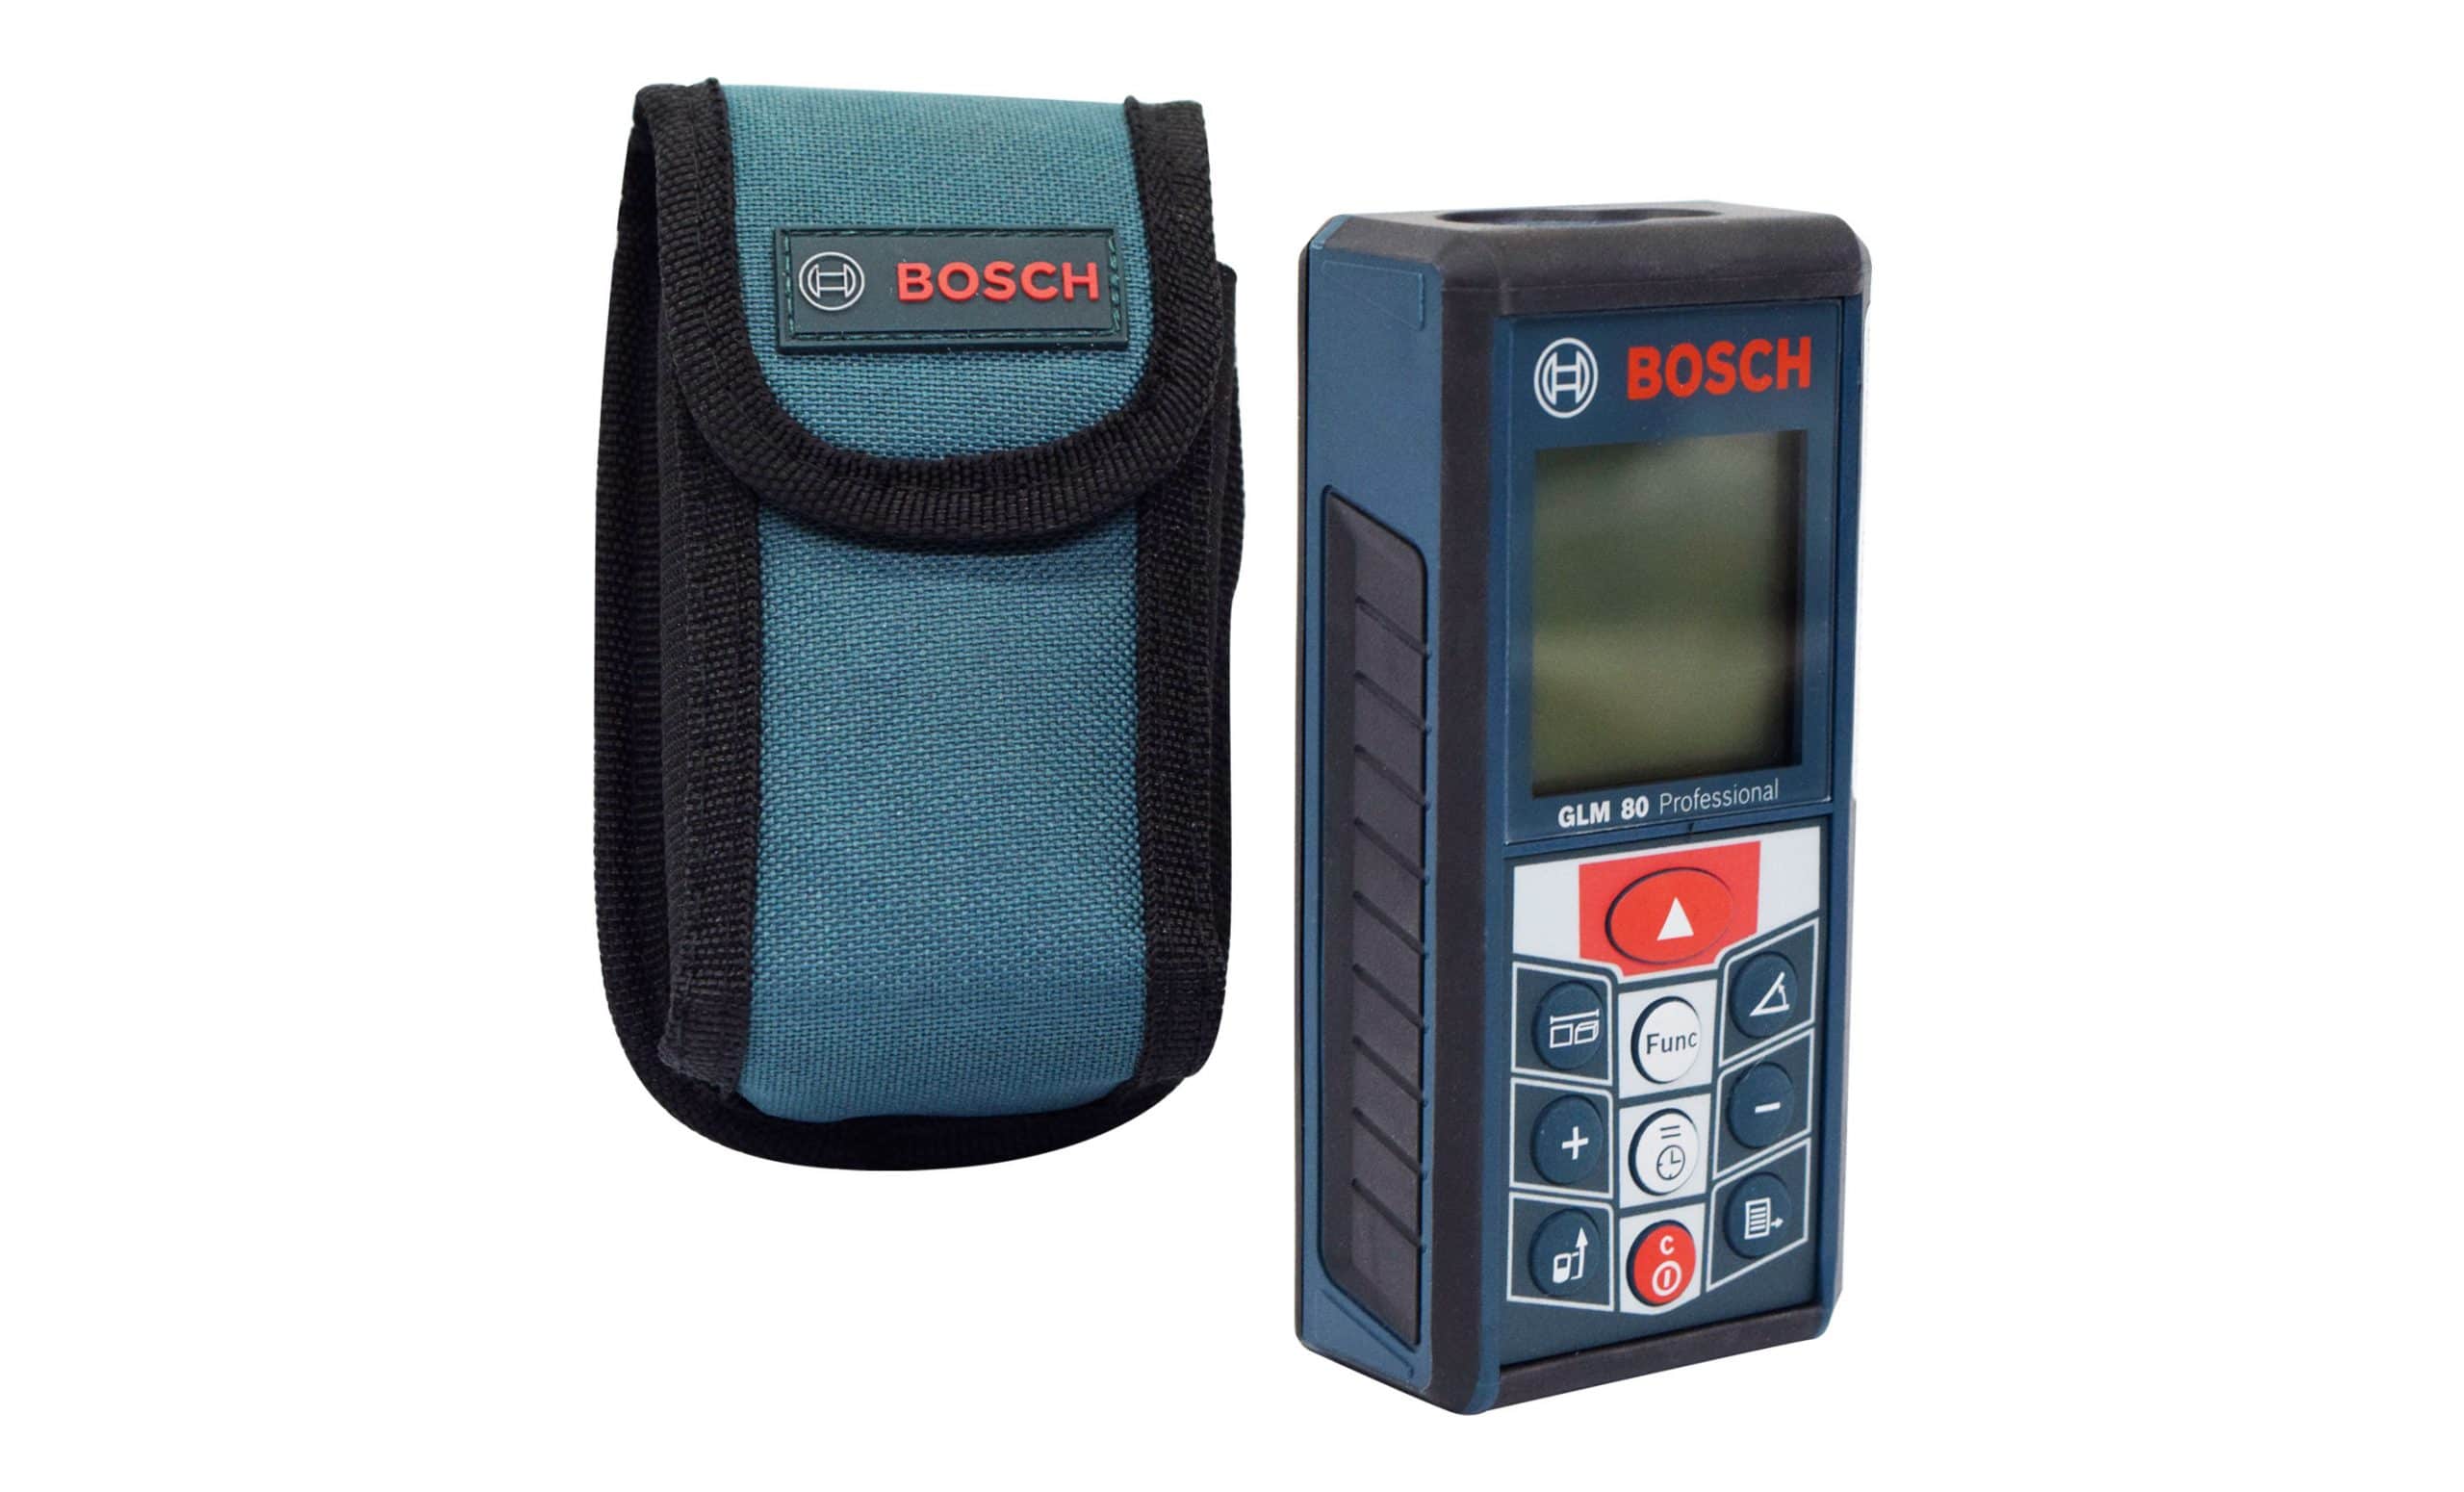 Bosch Medidor De Distancia Láser Glm 80